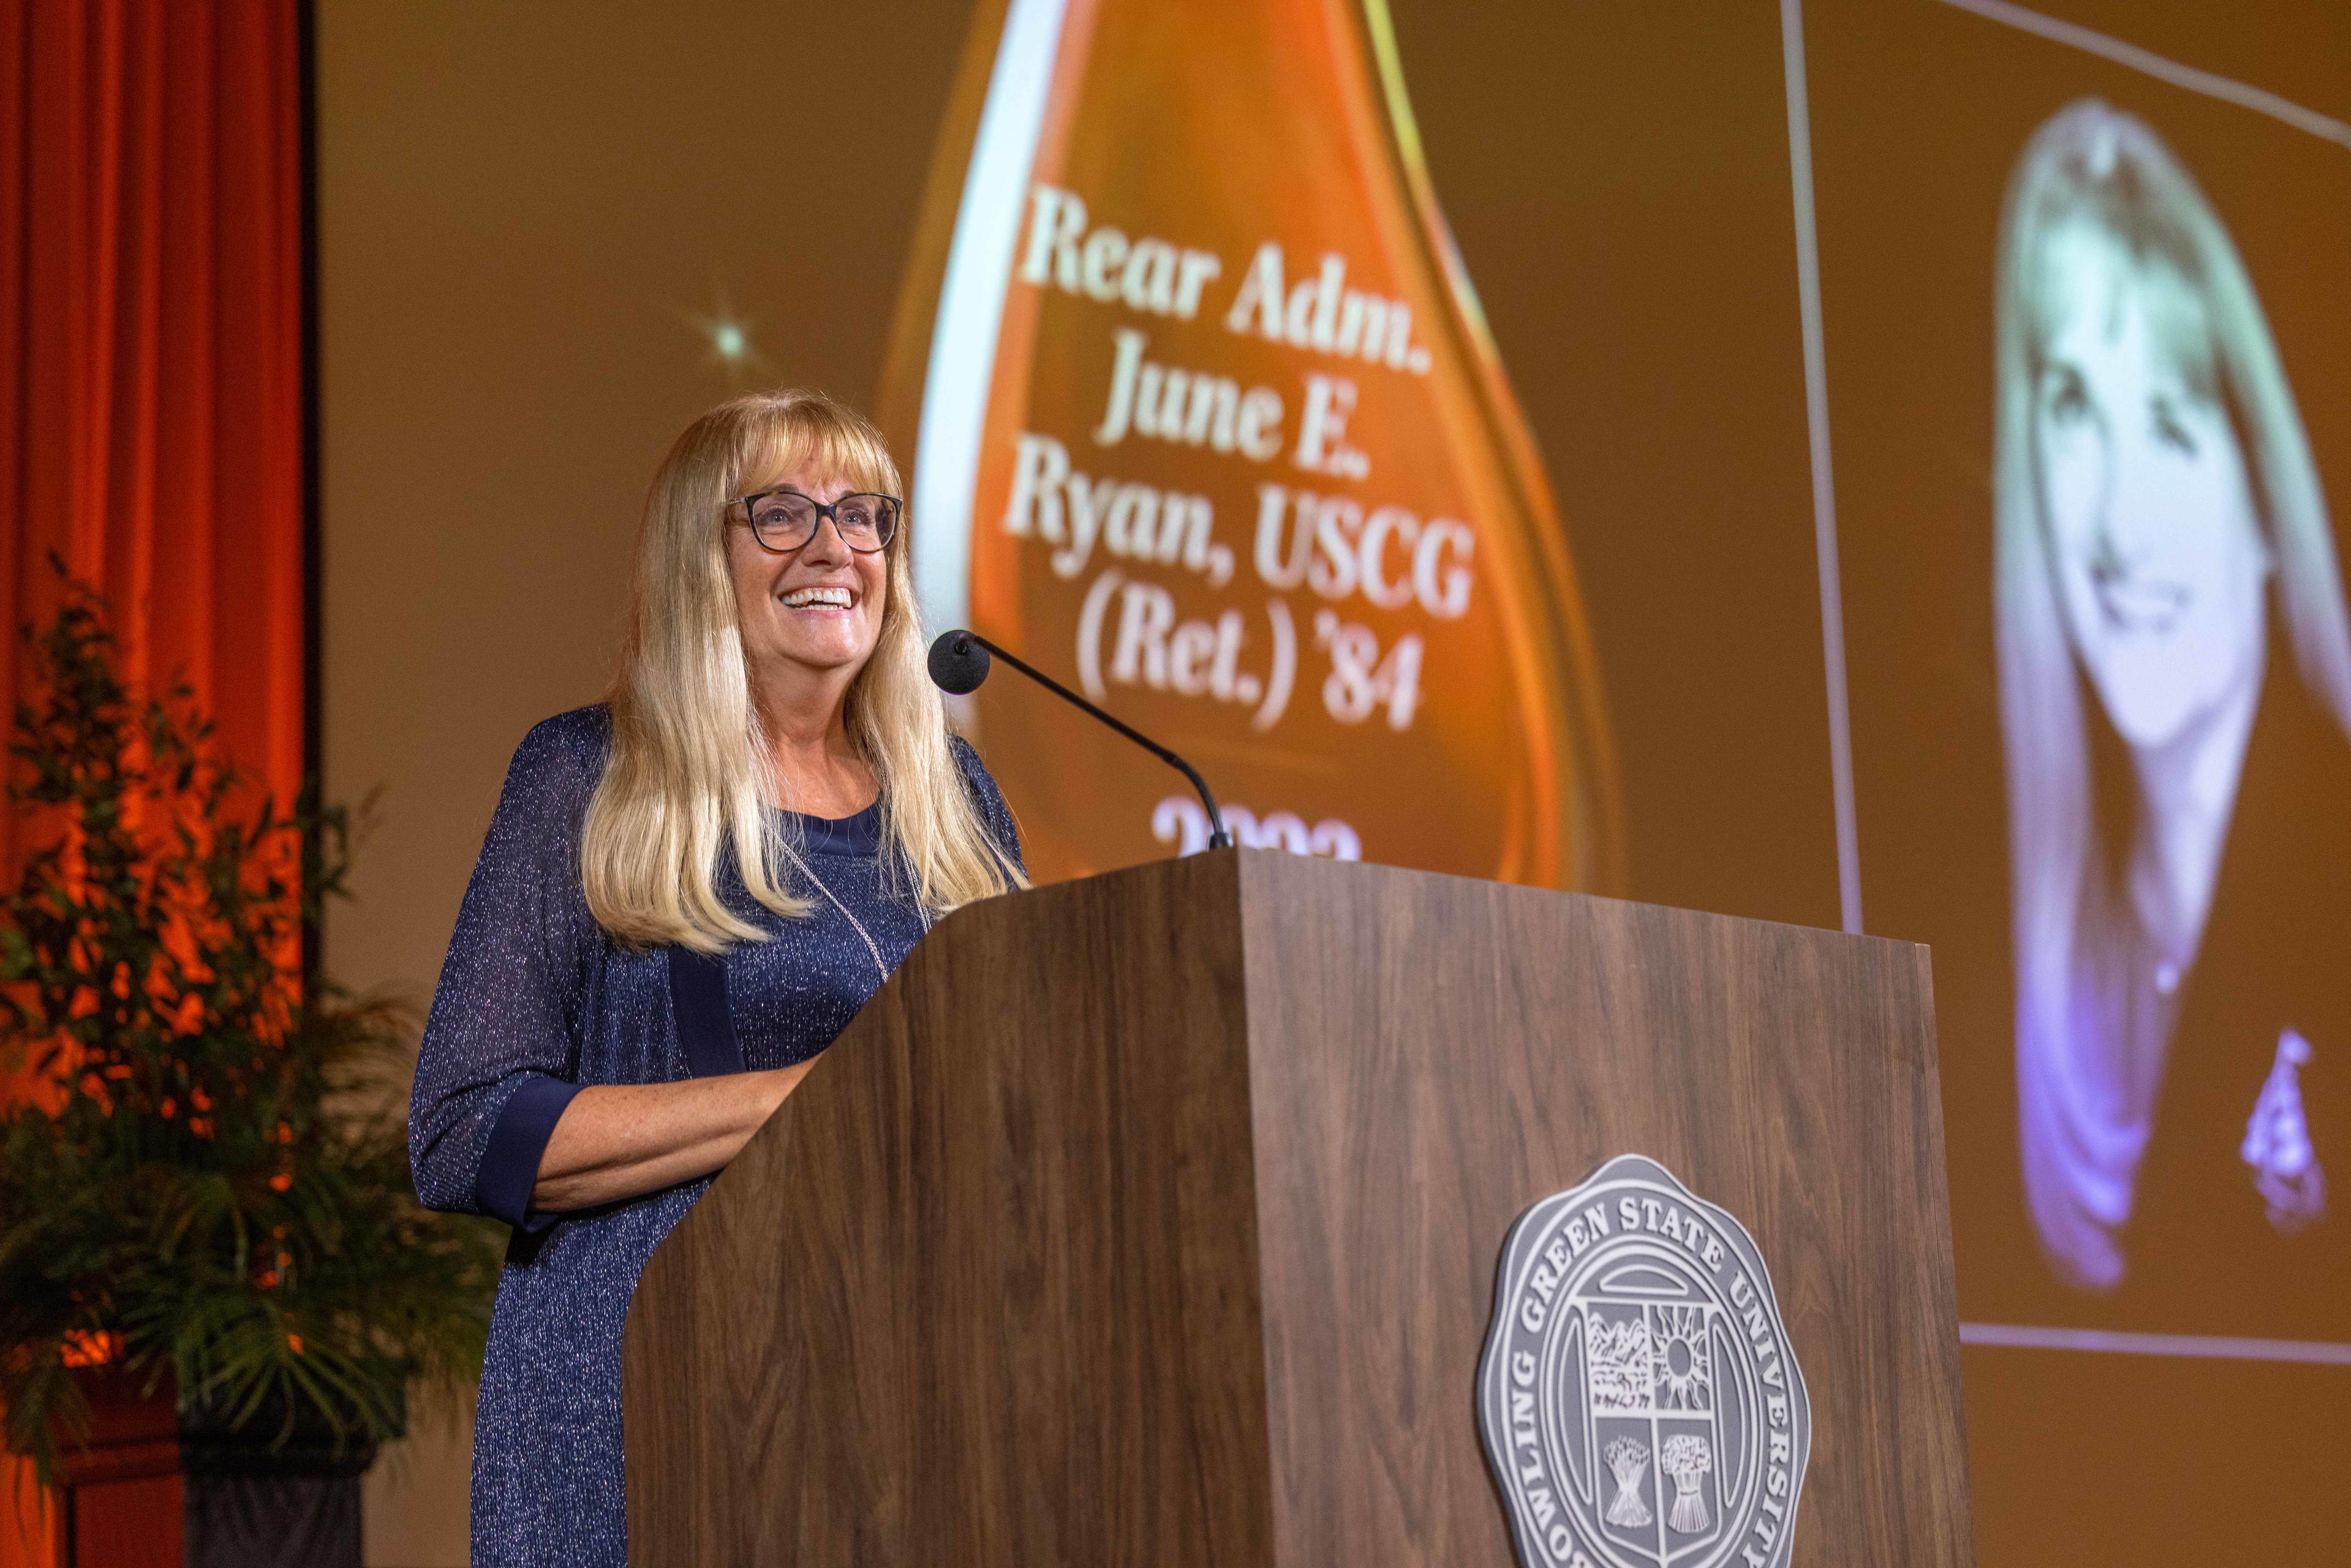 Rear Adm. June E. Ryan, USCG- Academy of Distinguished Alumni 2023 